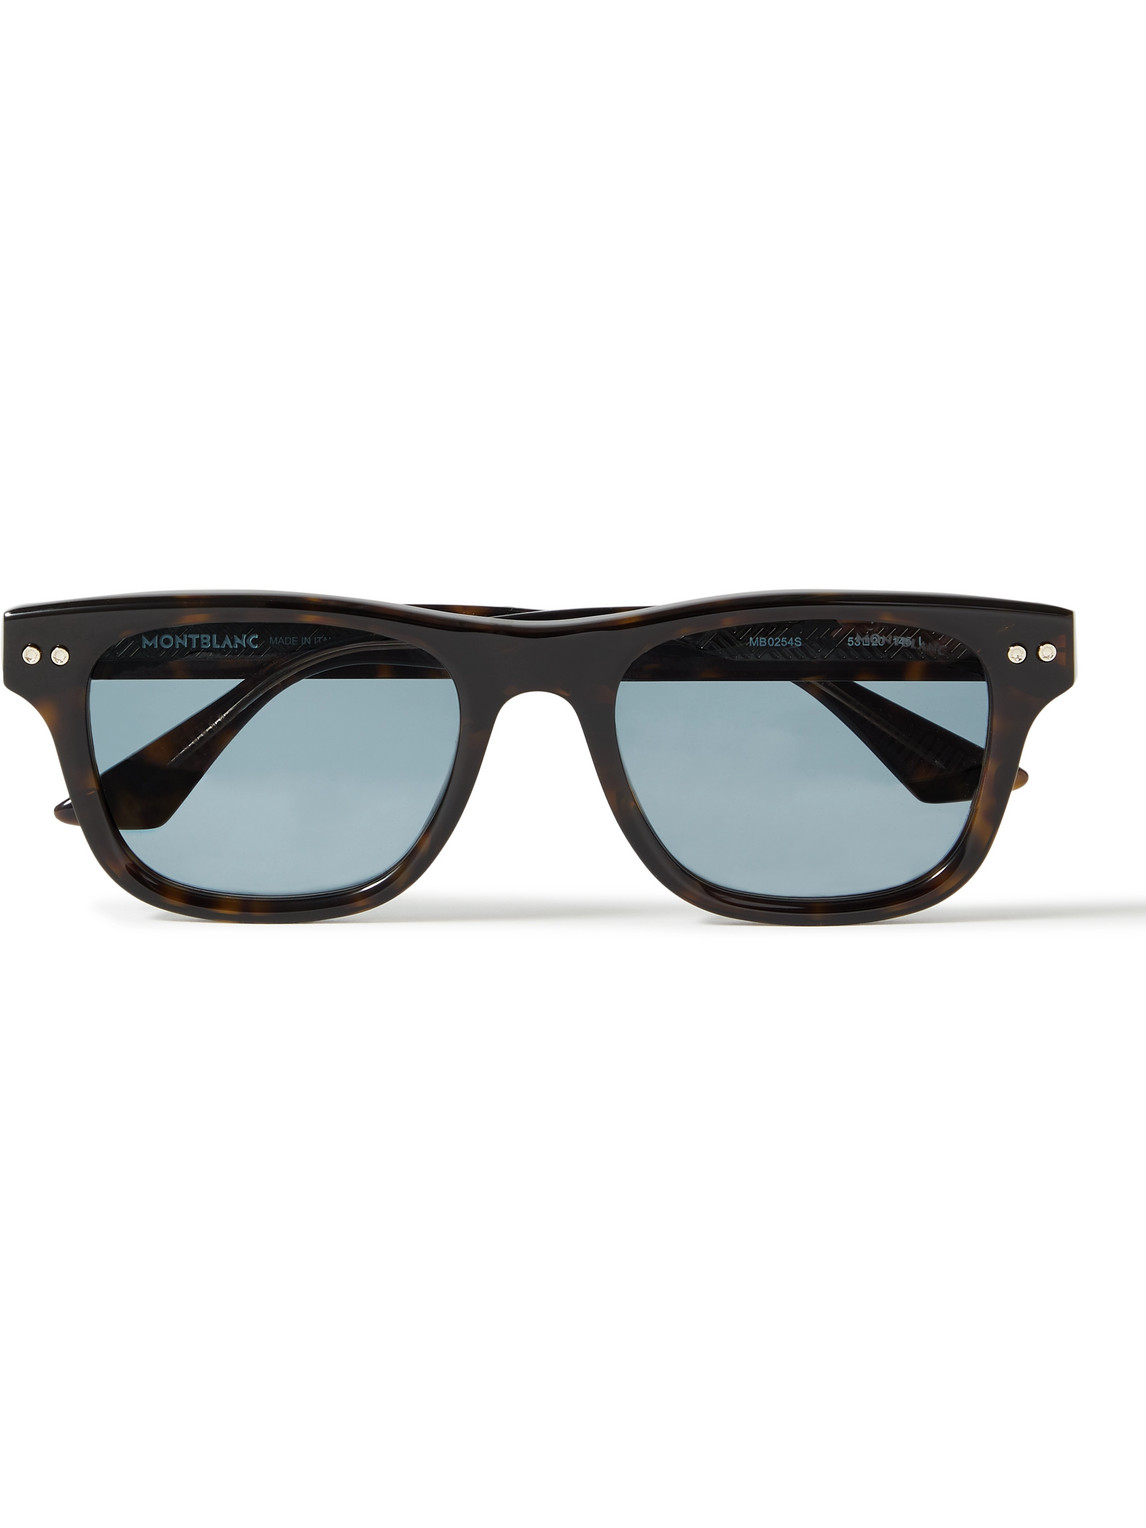 Montblanc D-frame Tortoiseshell Actetate Sunglasses